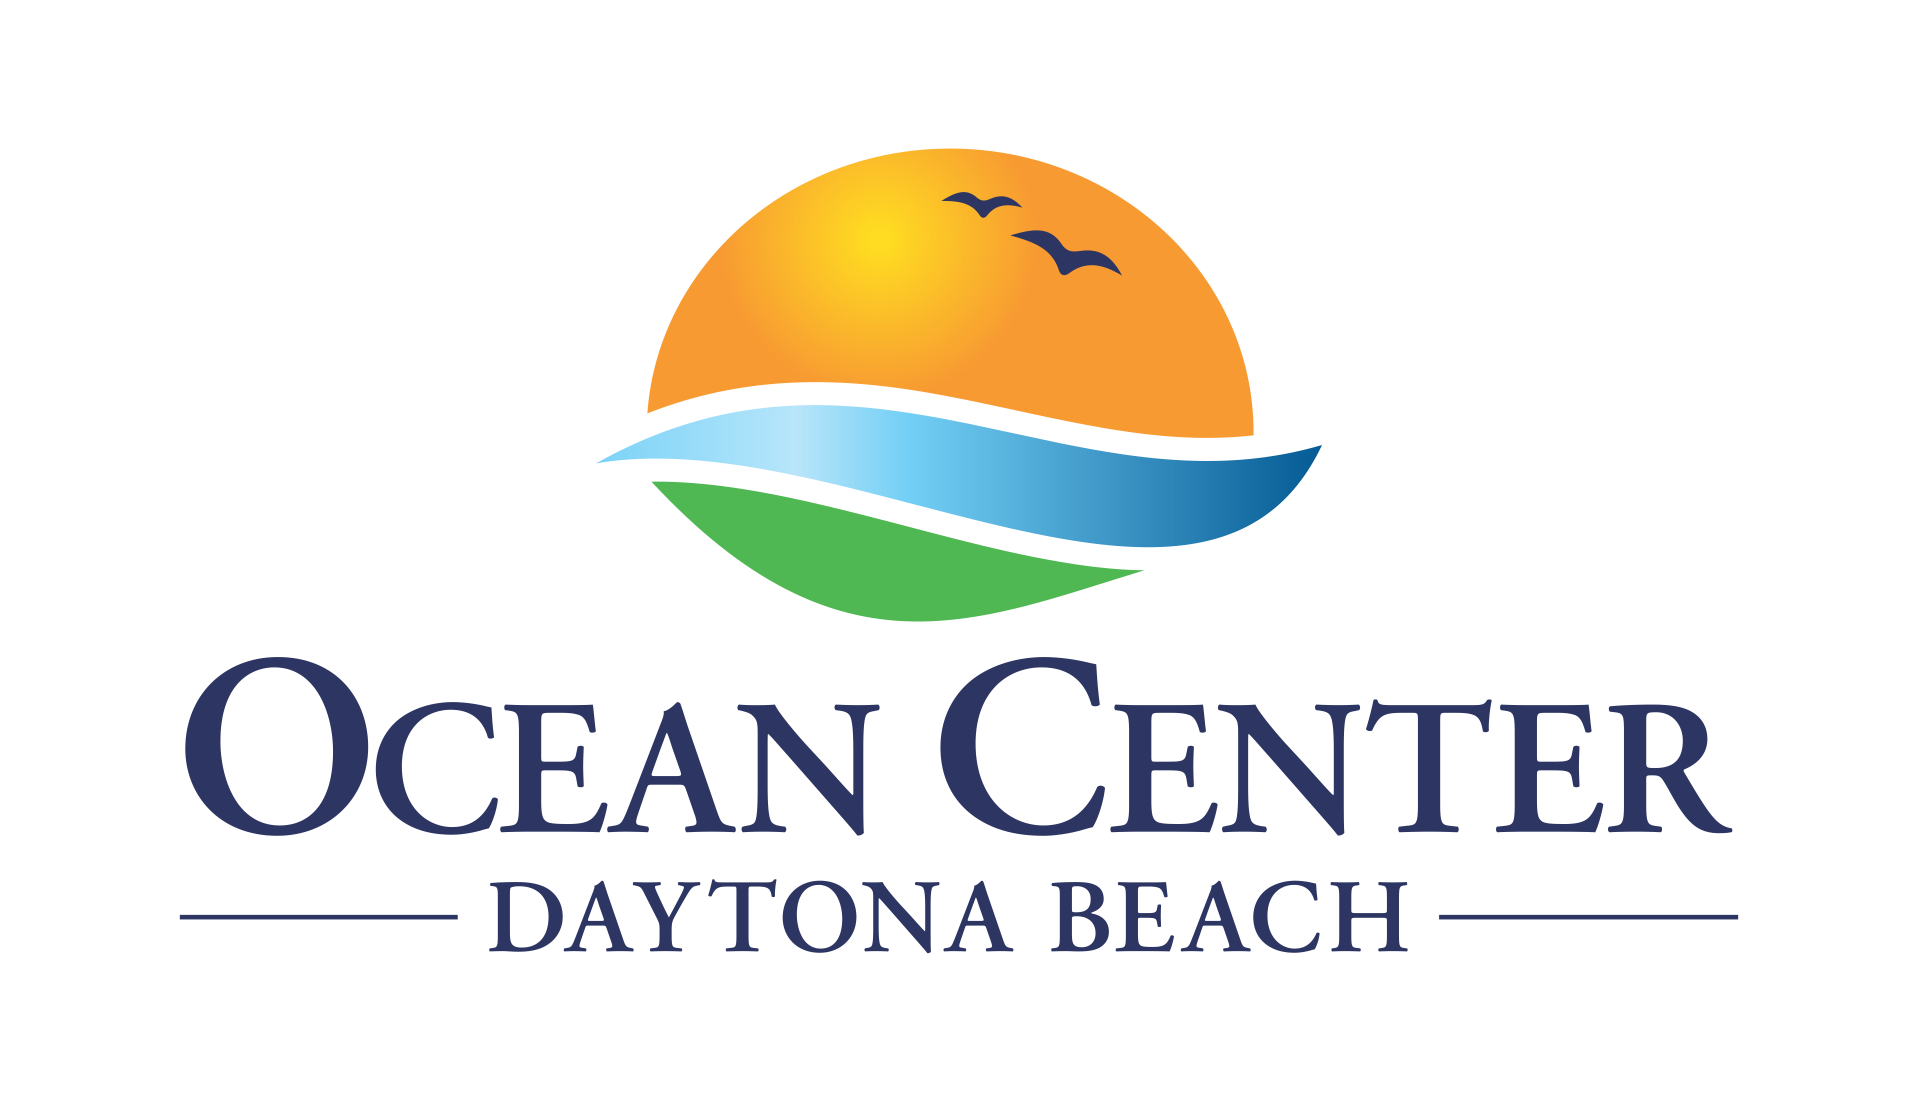 Ocean Center Daytona Beach